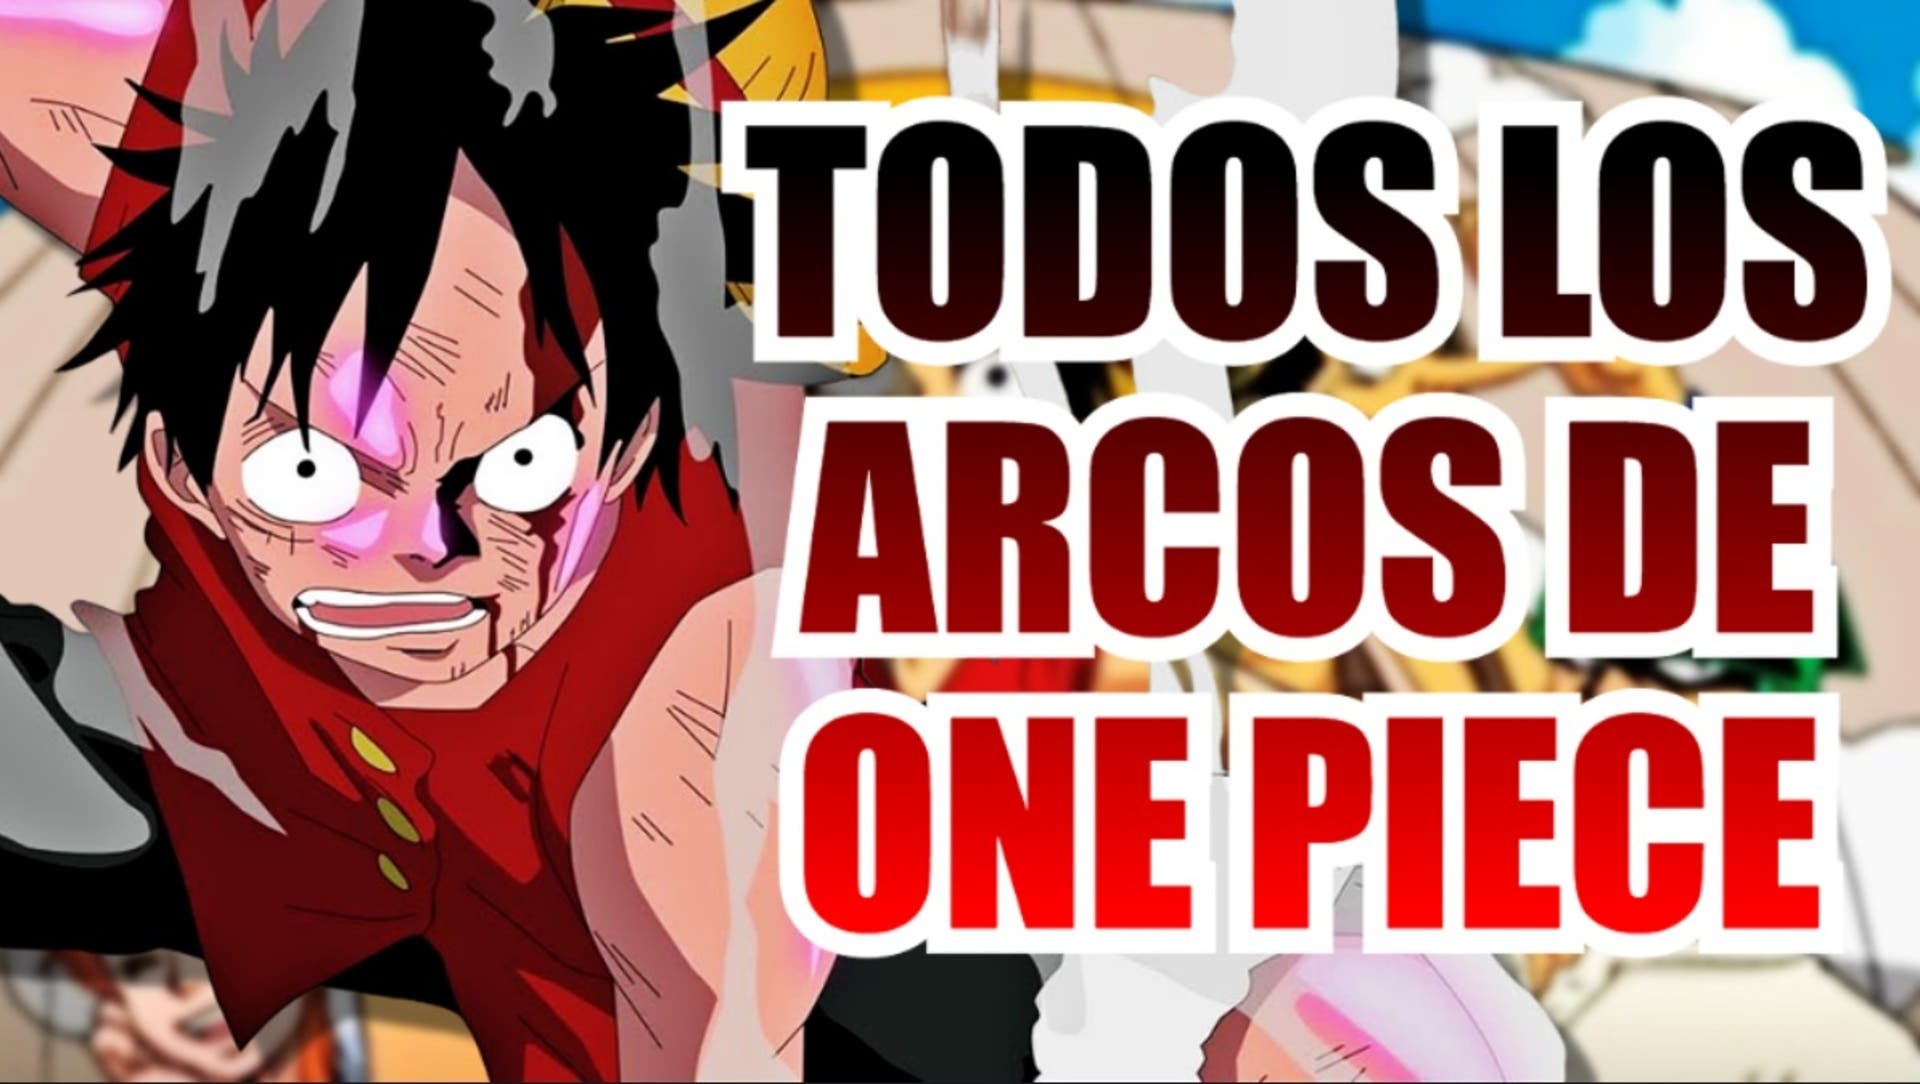 One piece, One Piece Episodio 590 Crossover